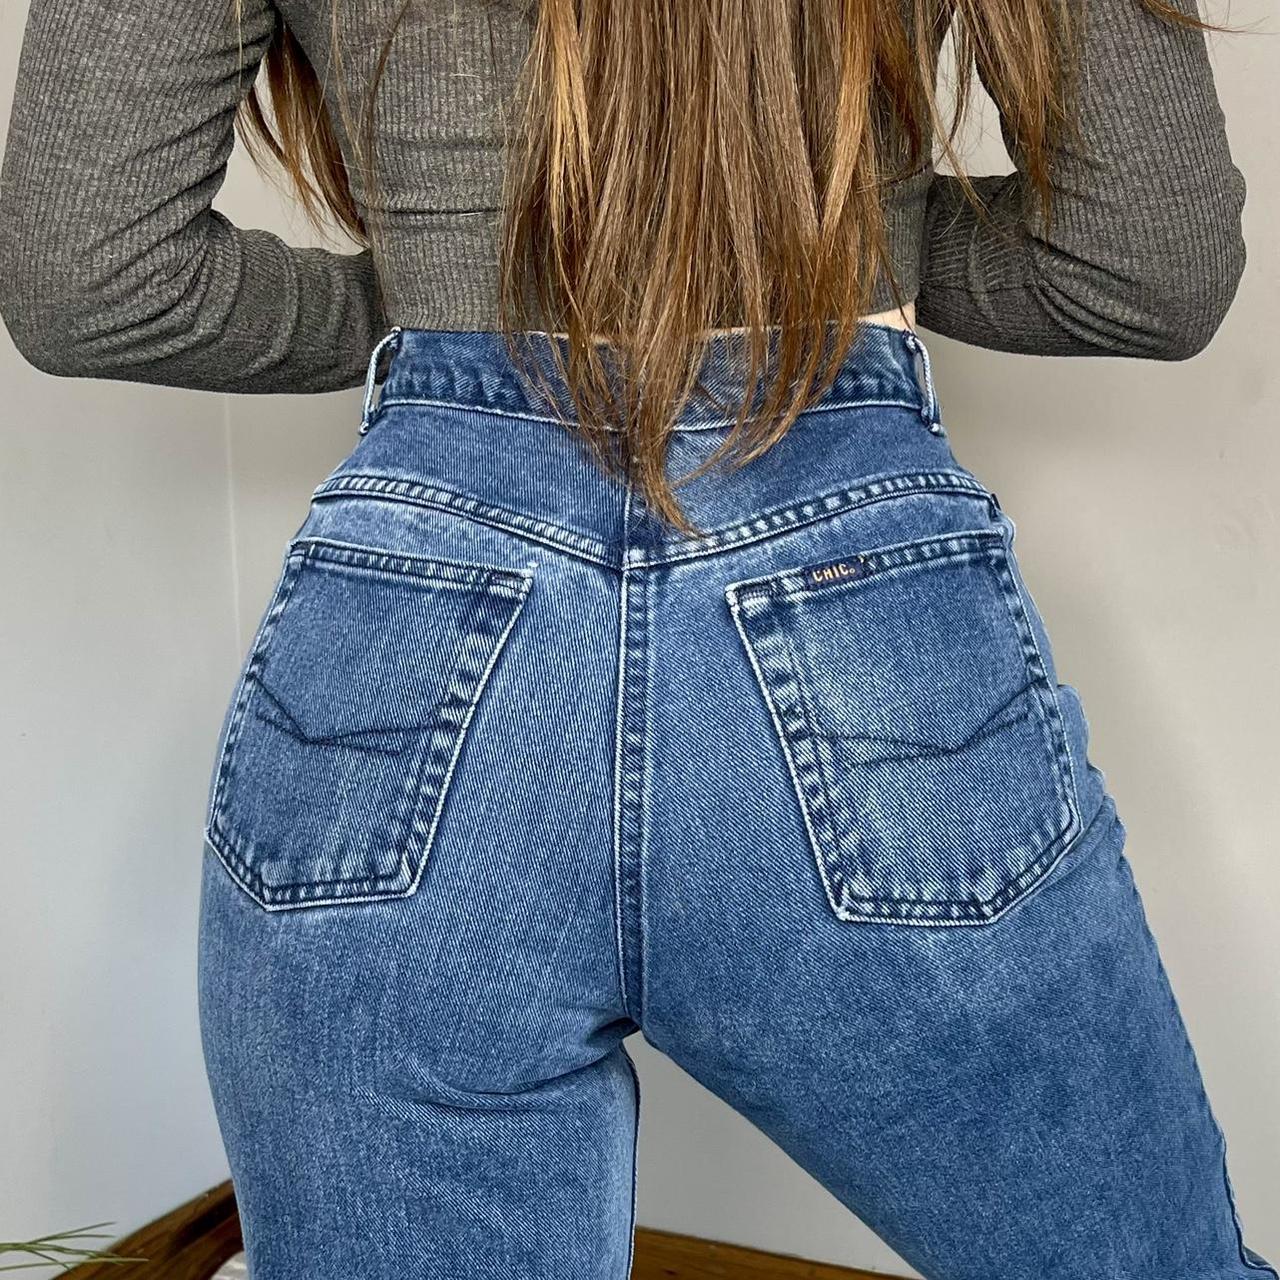 Chic Women's Jeans